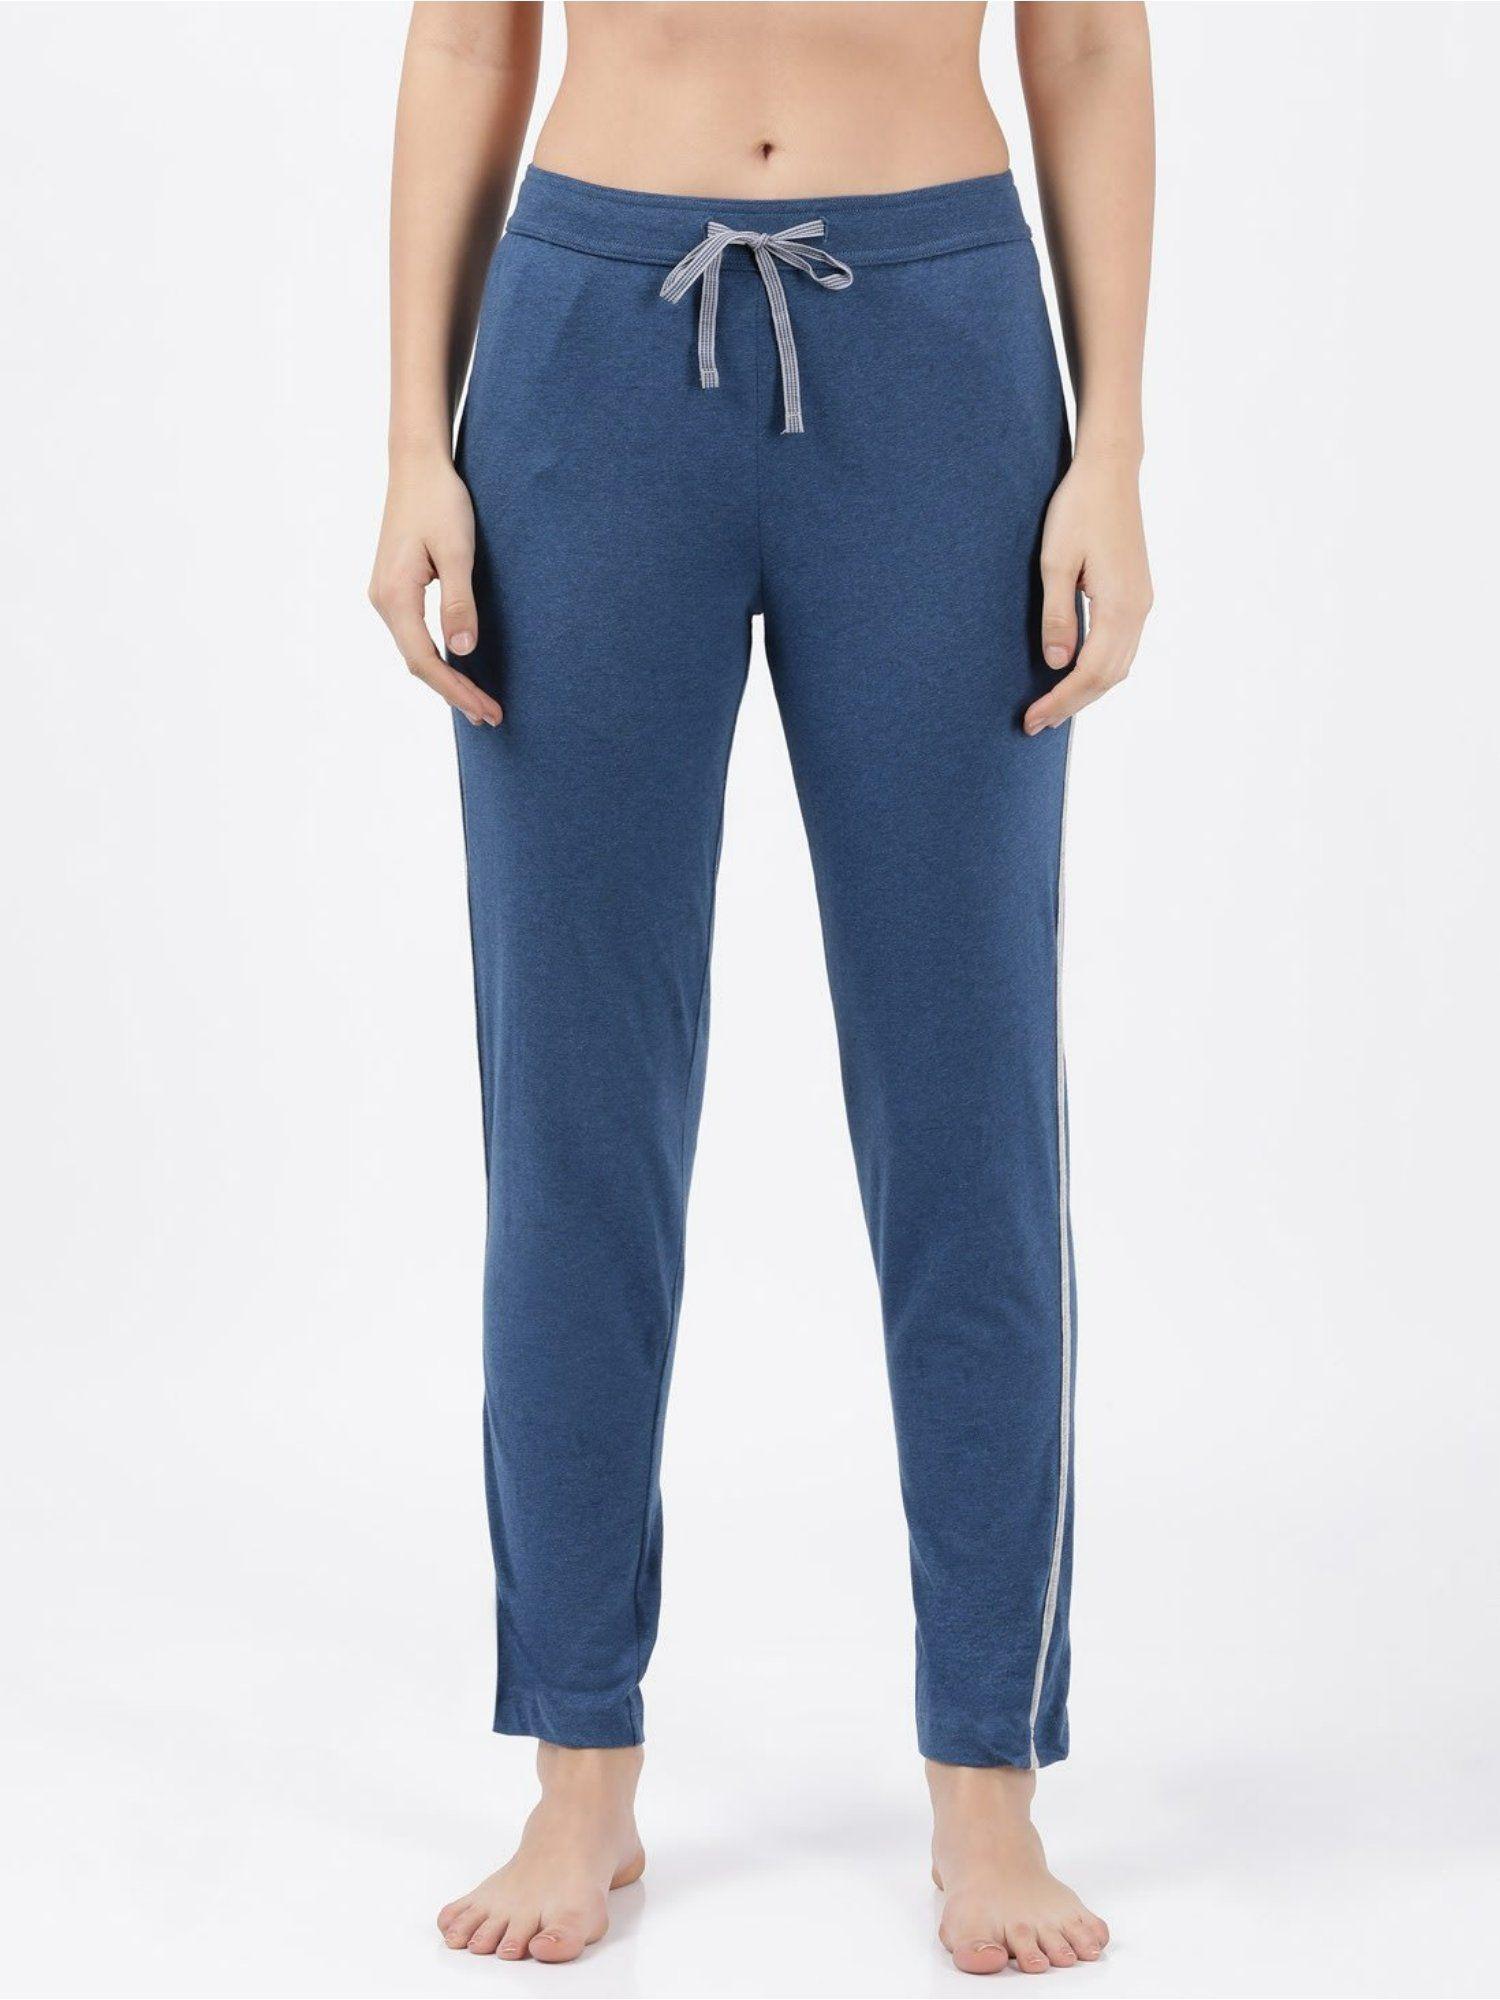 1305 women's cotton rich trackpants with convenient side pockets blue